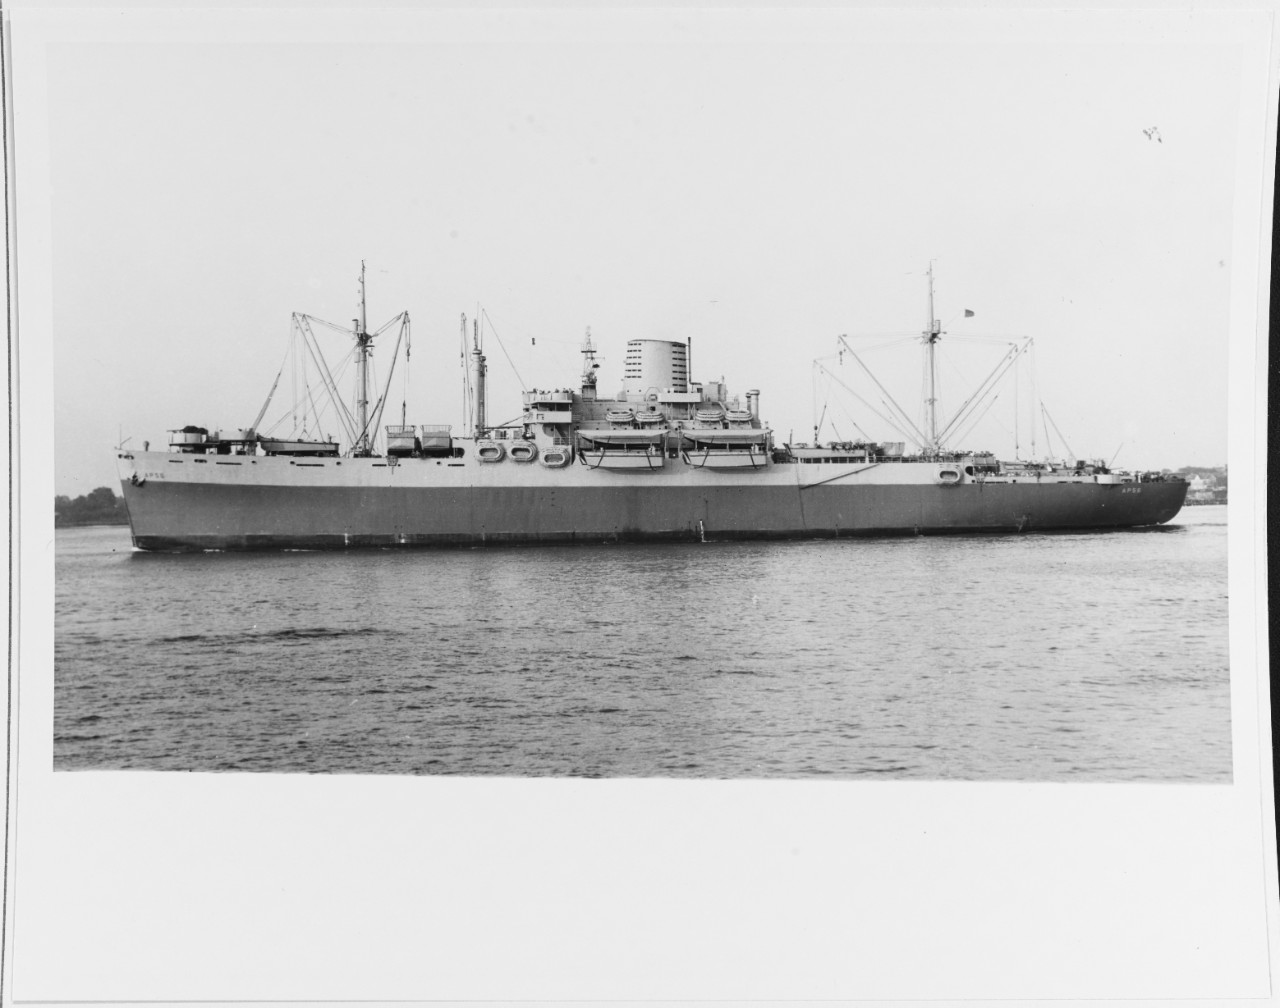 USS SAMUEL CHASE (AP-56)